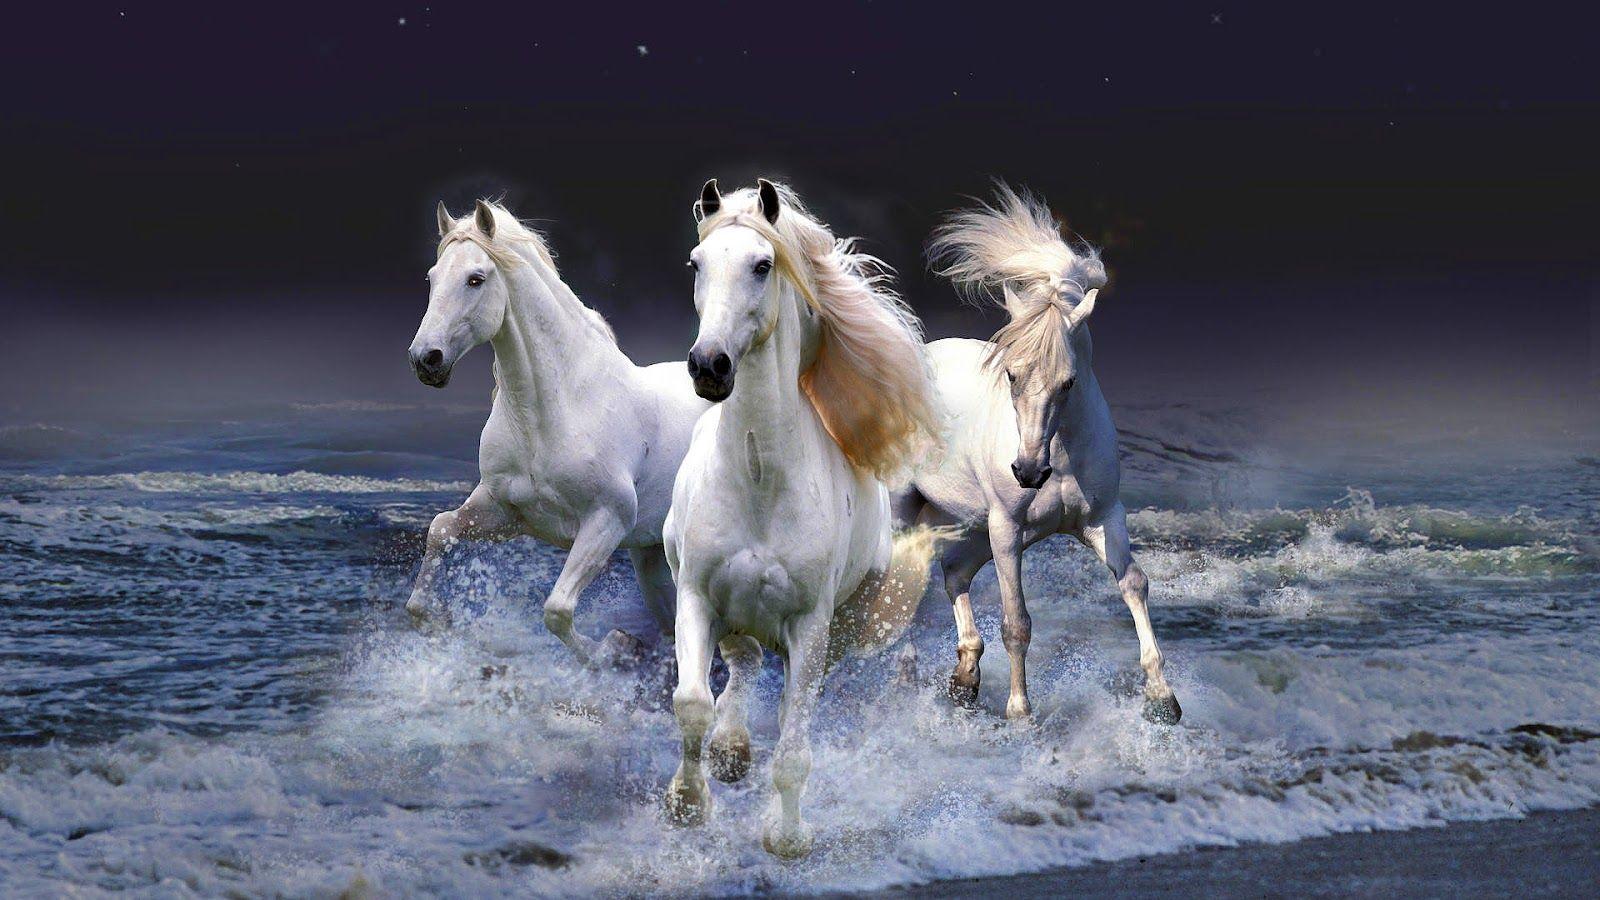 horses. HD animal wallpaper of white horses running through water